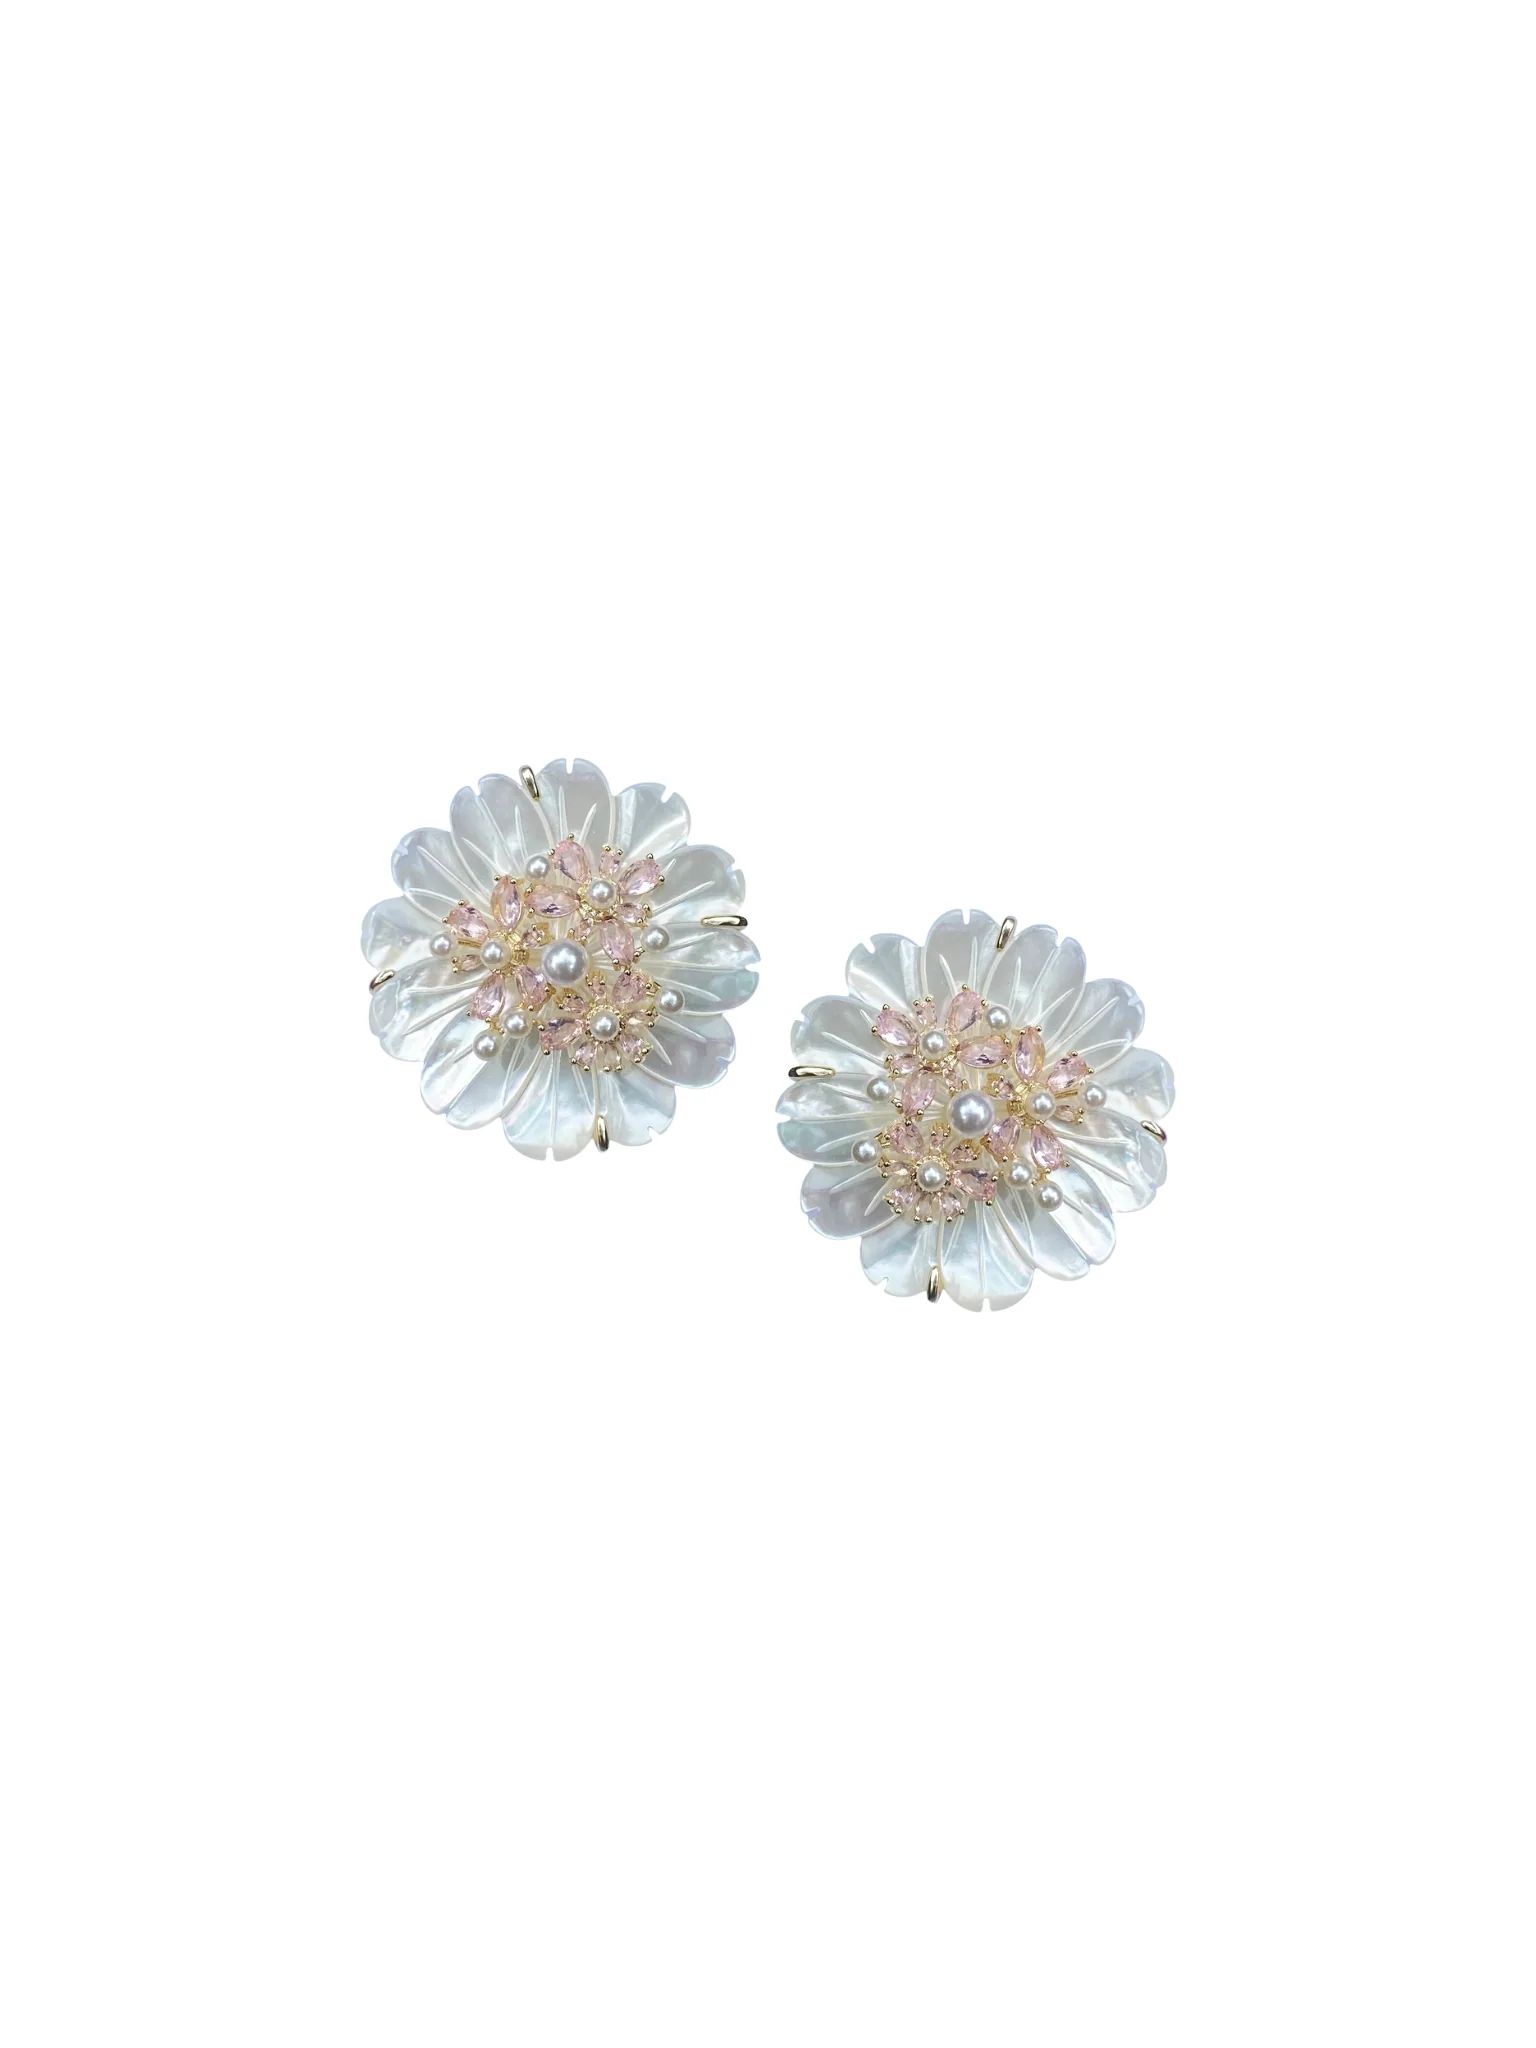 mother of pearl + rose quartz oversized studs | Nicola Bathie Jewelry